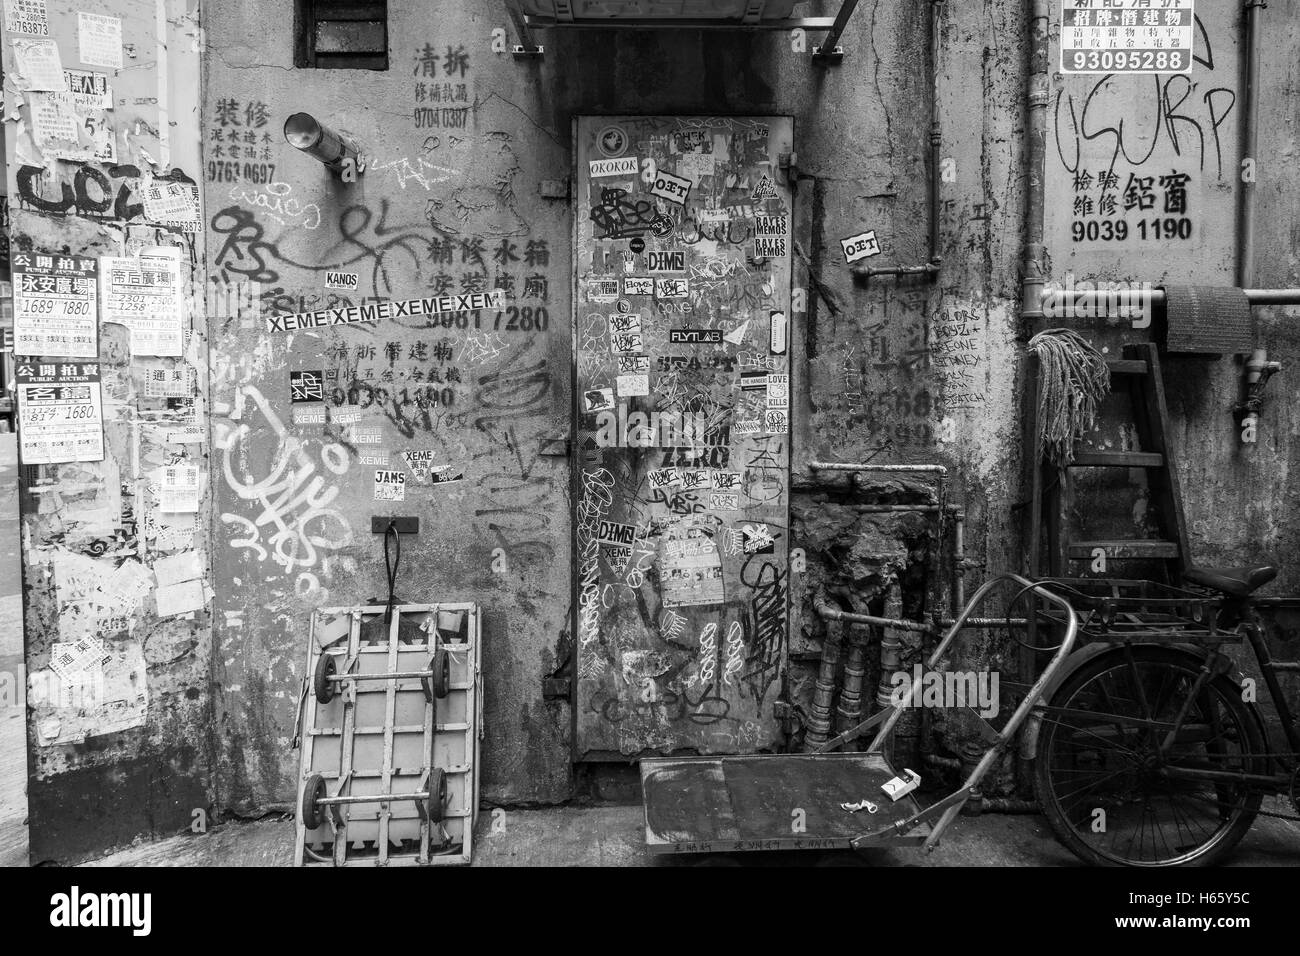 Graffiti, stickers and posters on a dirty and aged wall at some shady back street in Tsim Sha Tsui, Kowloon, Hong Kong, China. Stock Photo